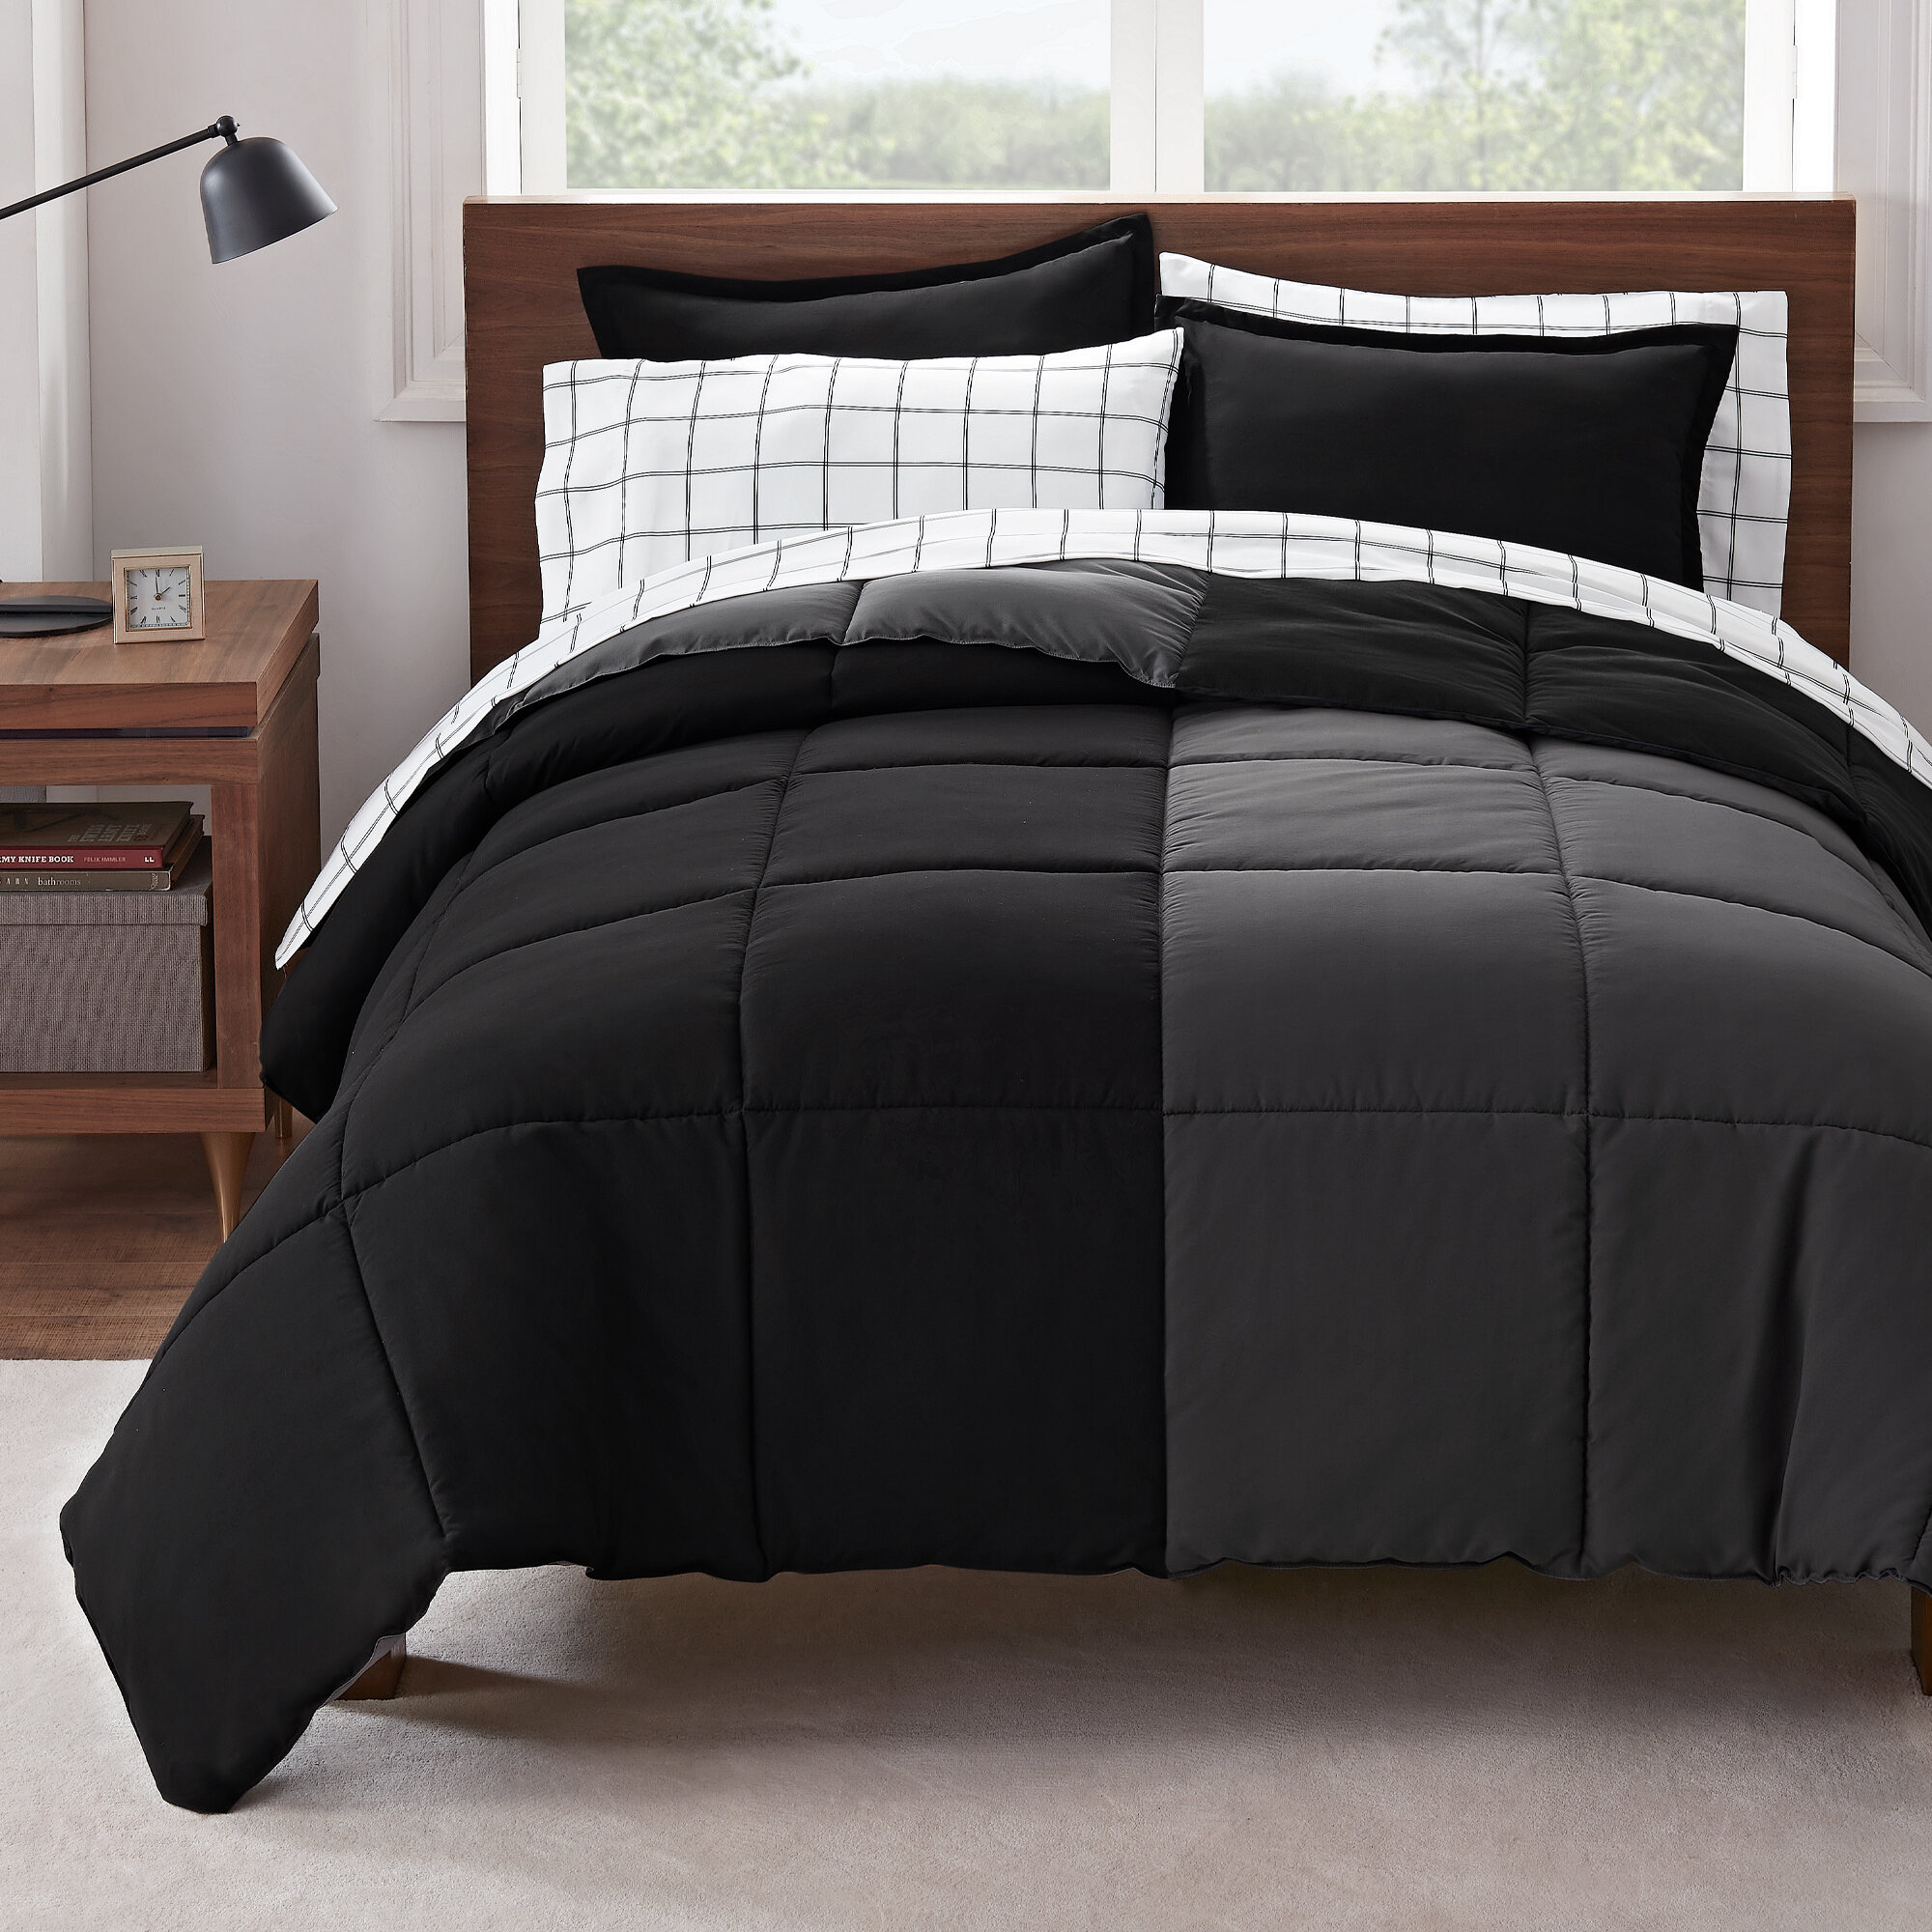 Black Bedding Sets You Ll Love In 2021 Wayfair